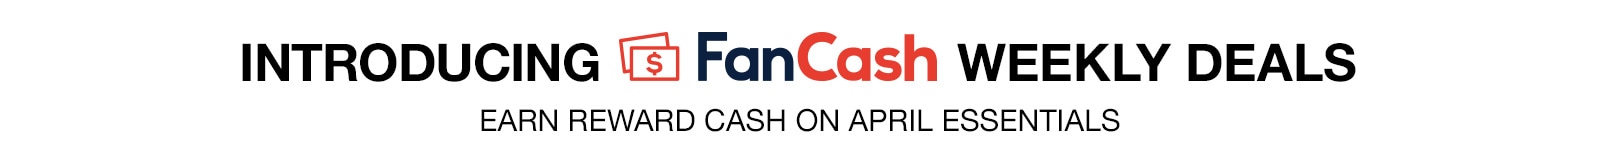 Introducing FanCash Weekly Deals Earn Reward Cash on April Essentials